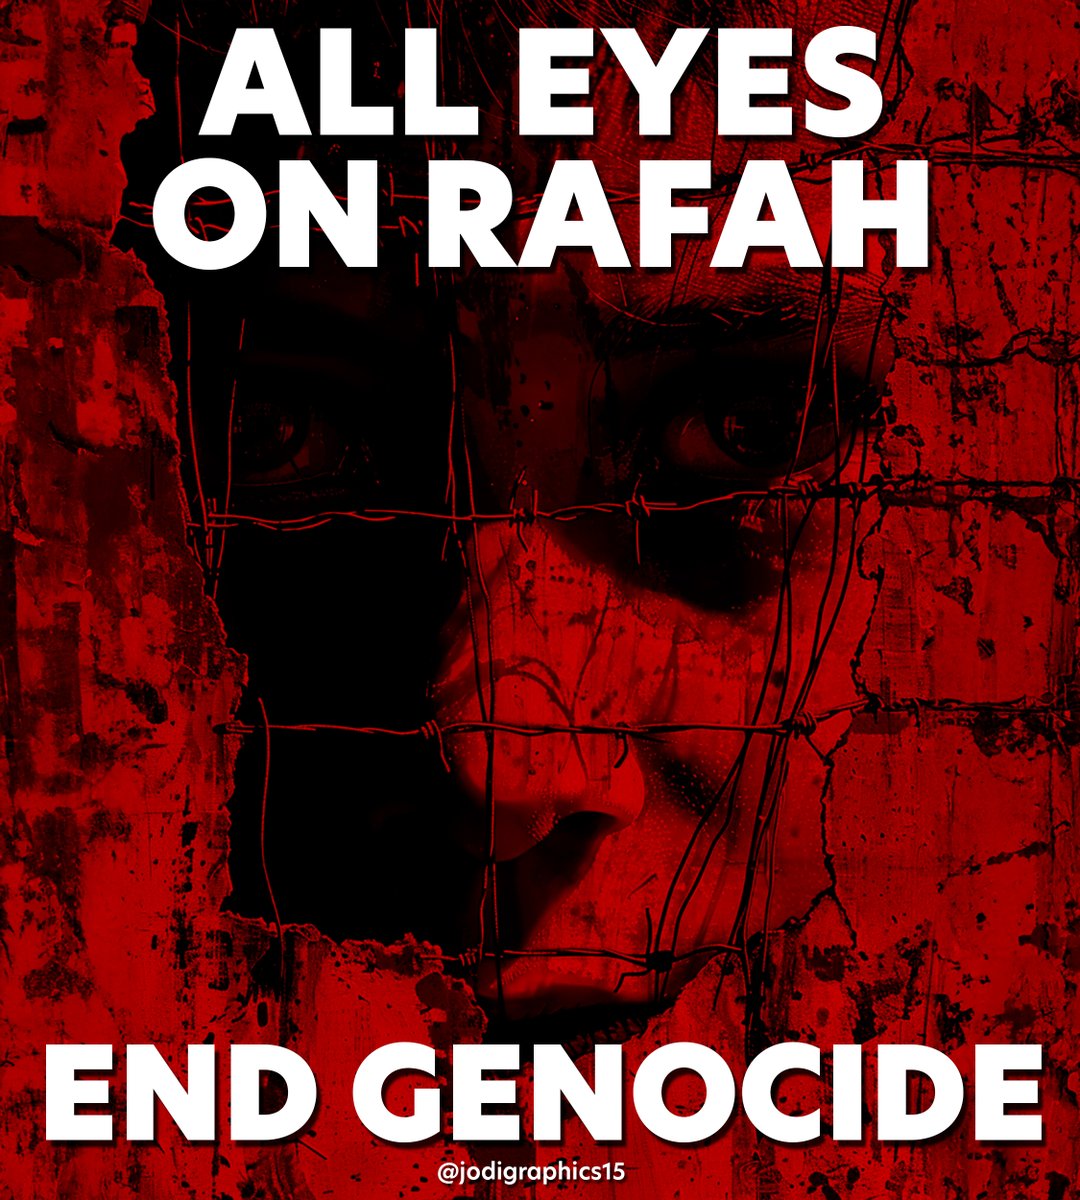 🇵🇸 #AllEyesOnRafah

✊#FreePalestine #CeaseFireNOW #EndGenocide